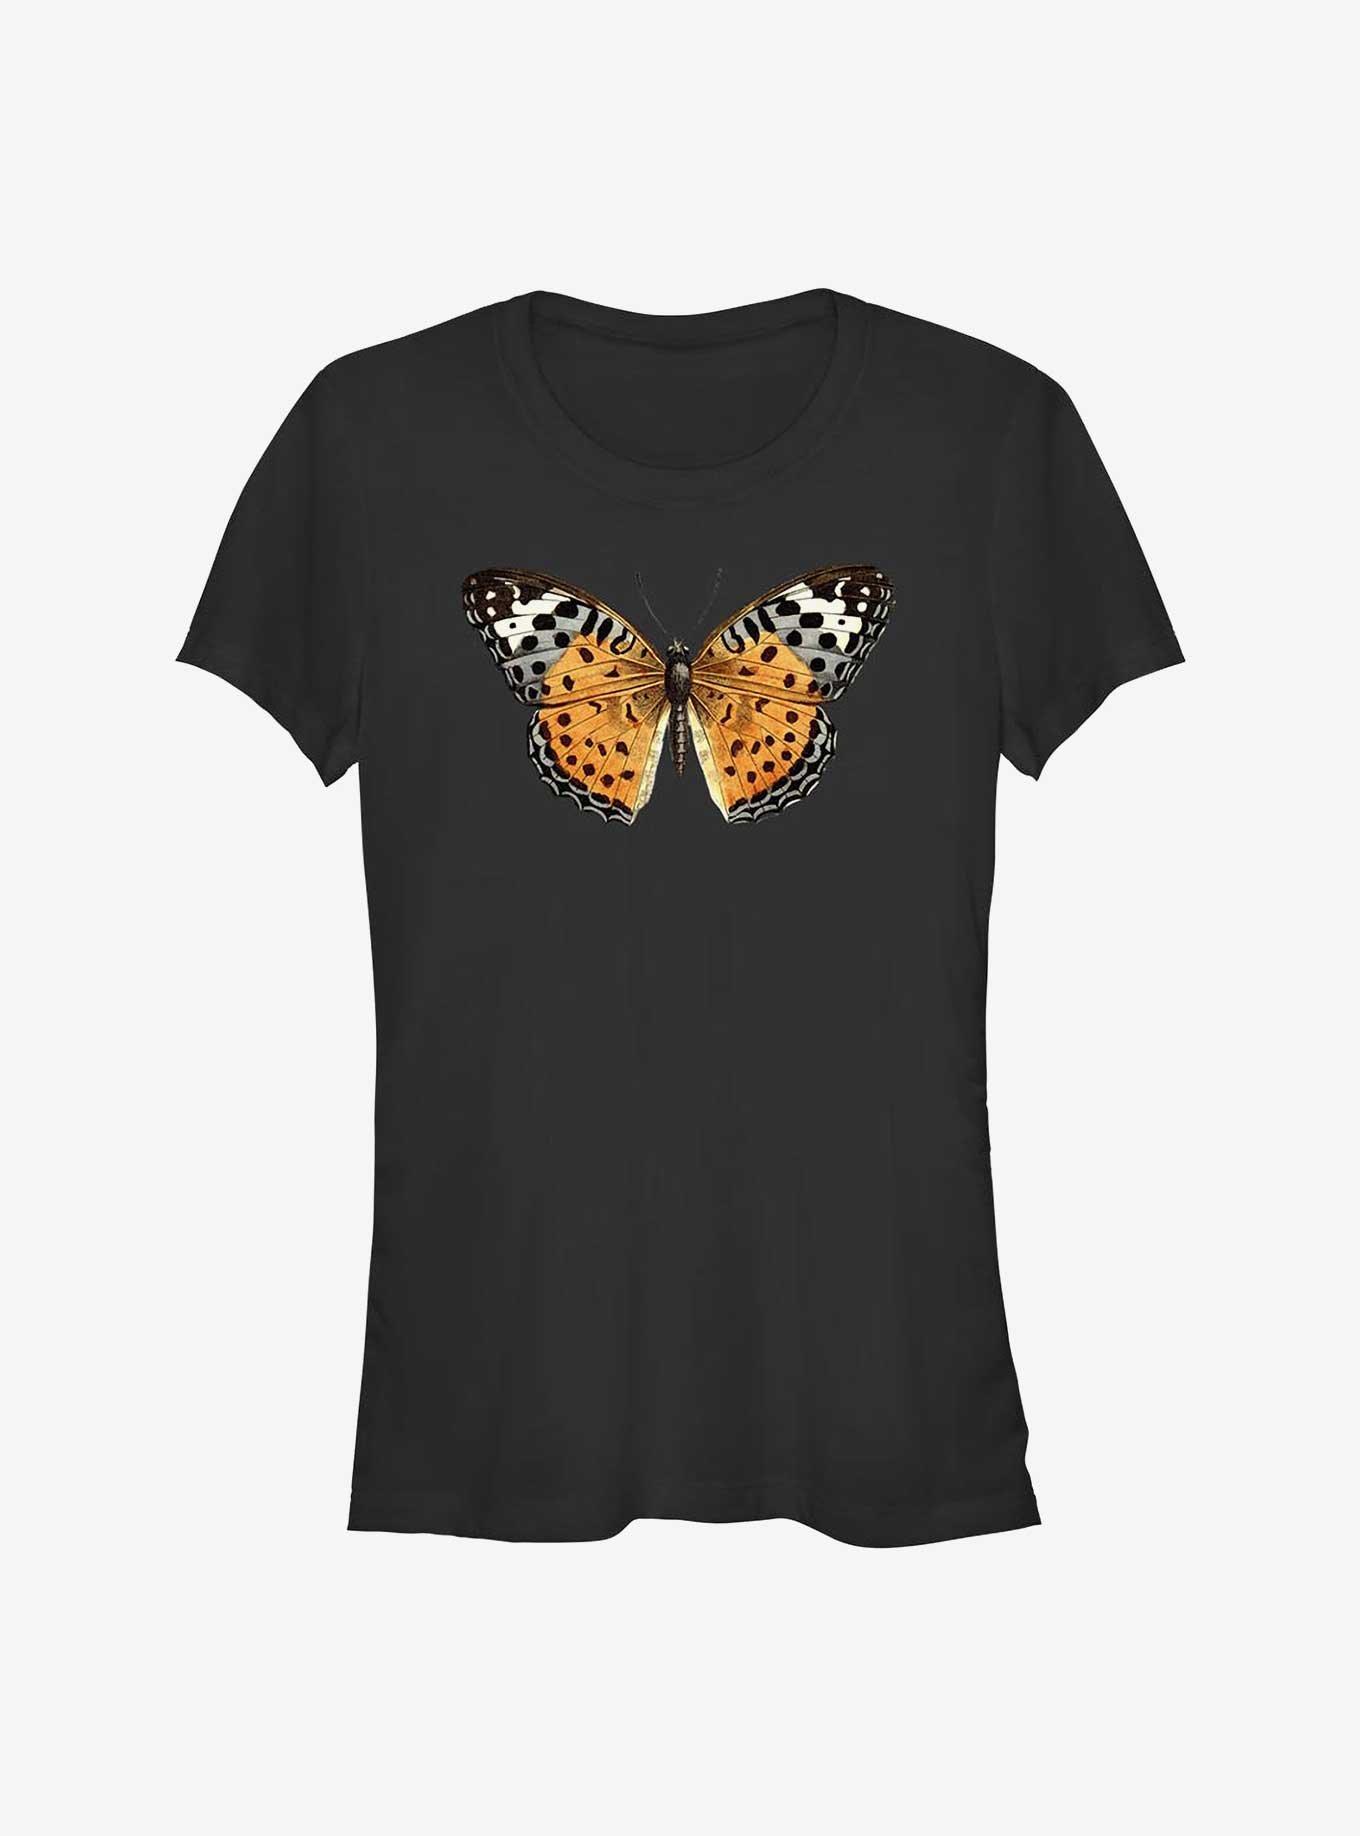 Butterfly Girls T-Shirt, BLACK, hi-res